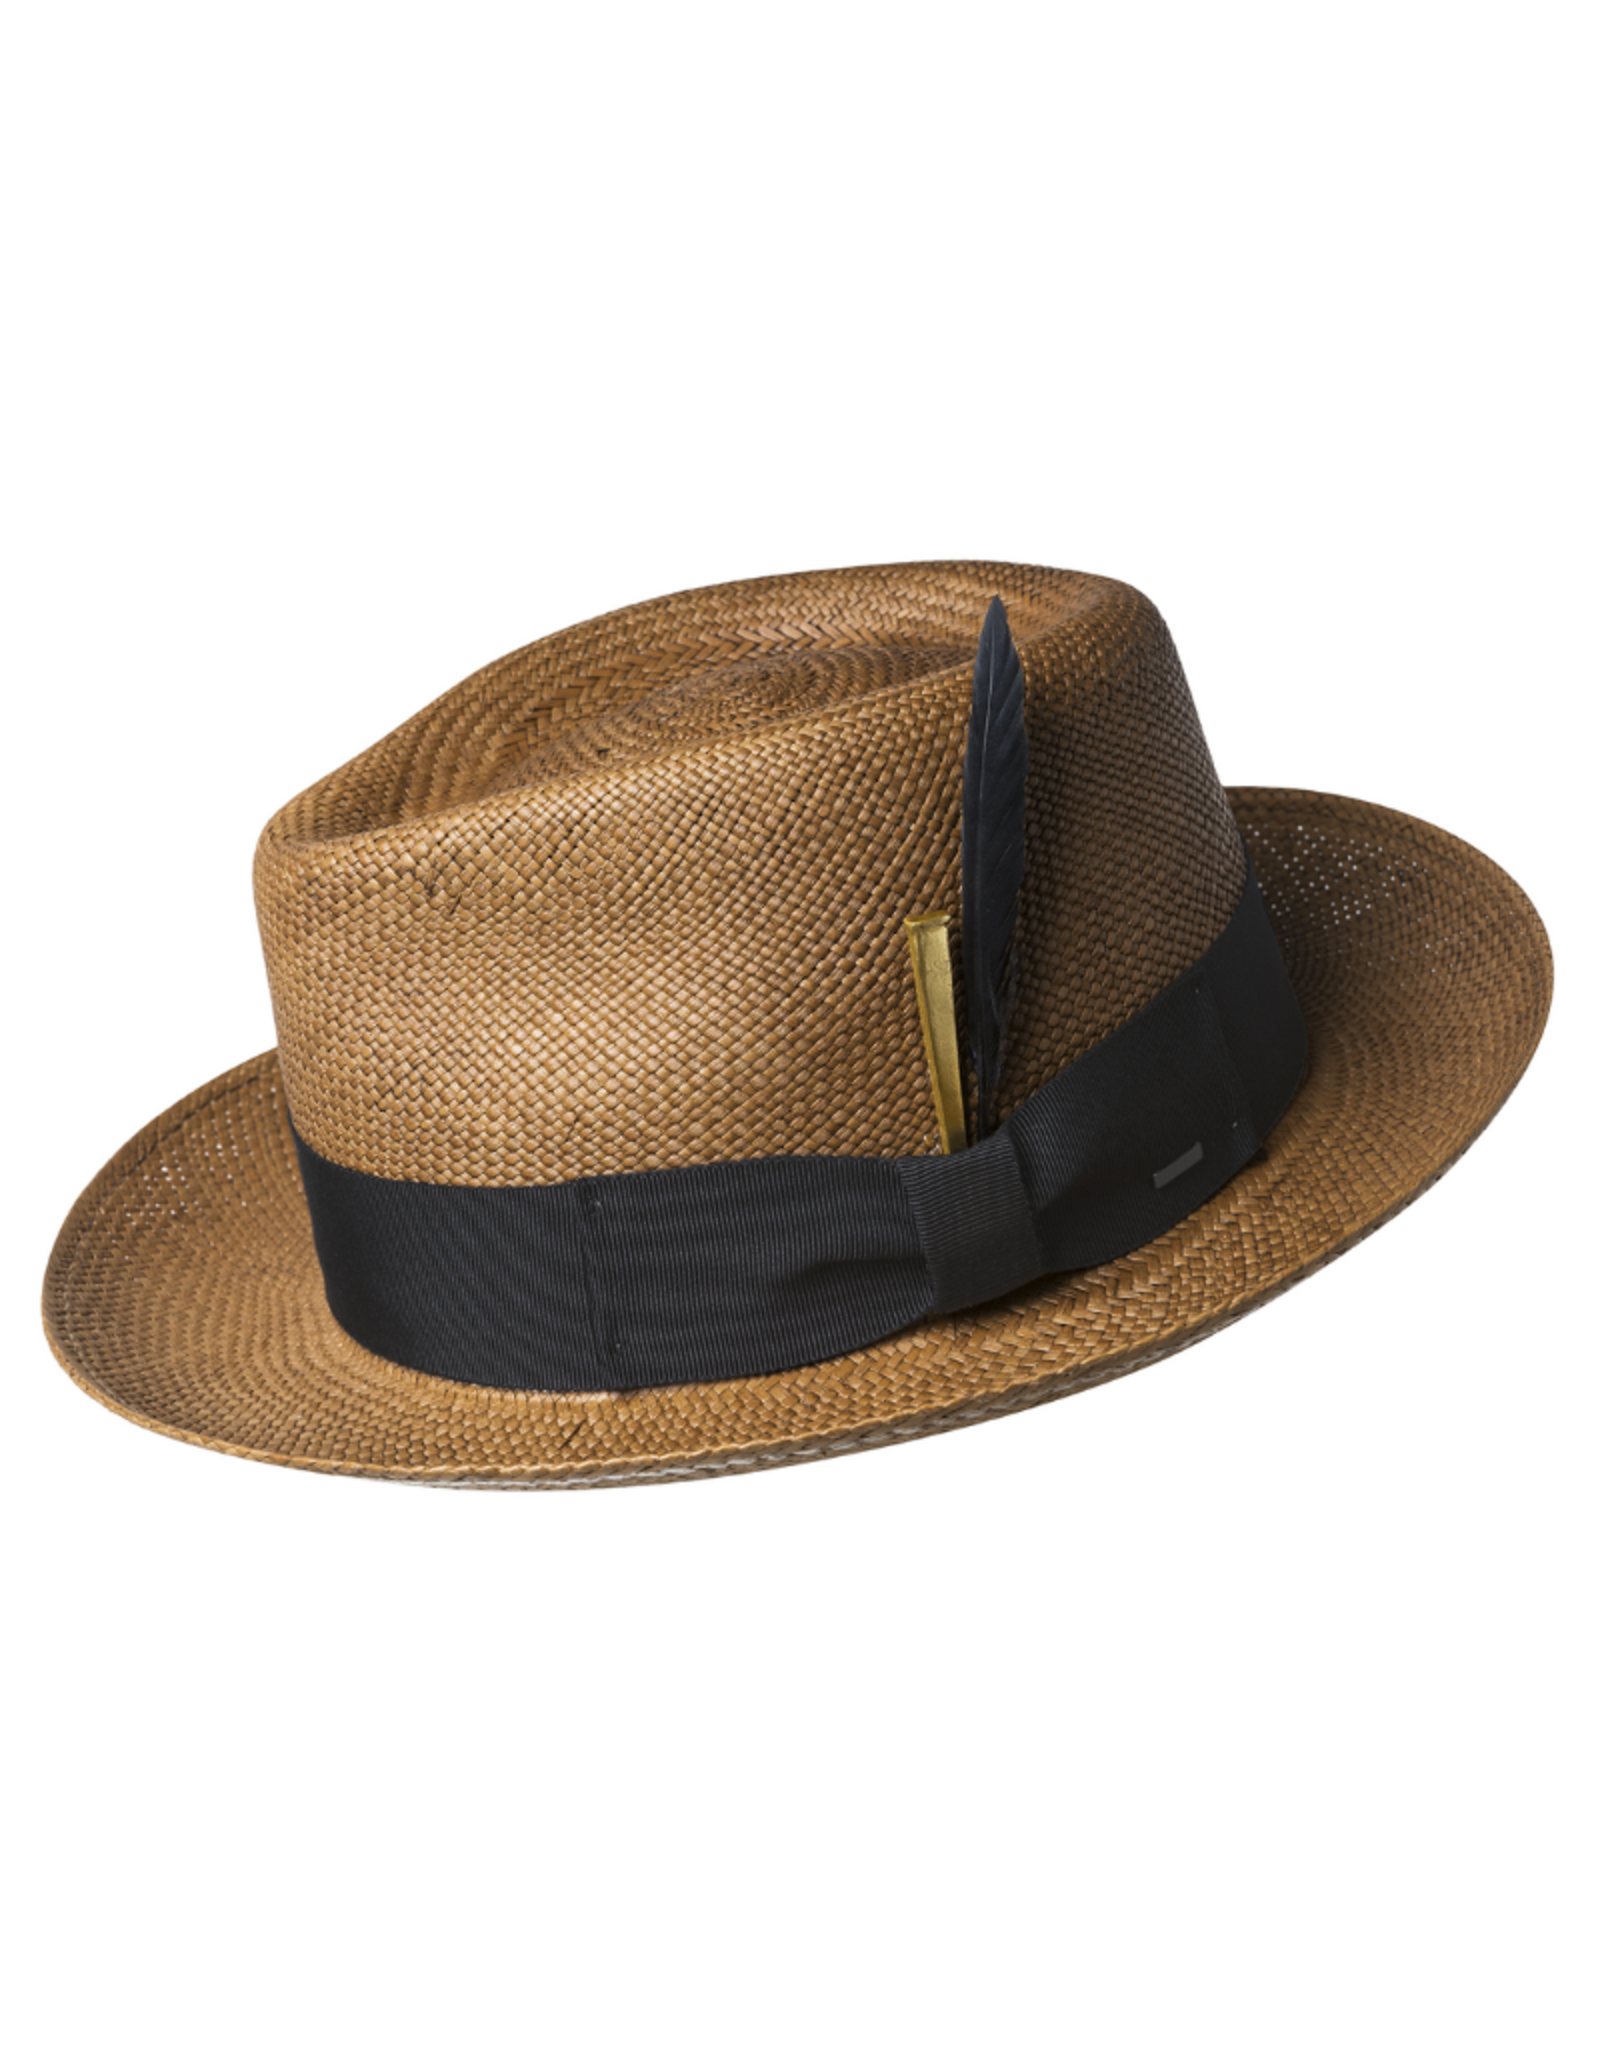 Bailey Hat Co. HAT-PANAMA "TESSIER"